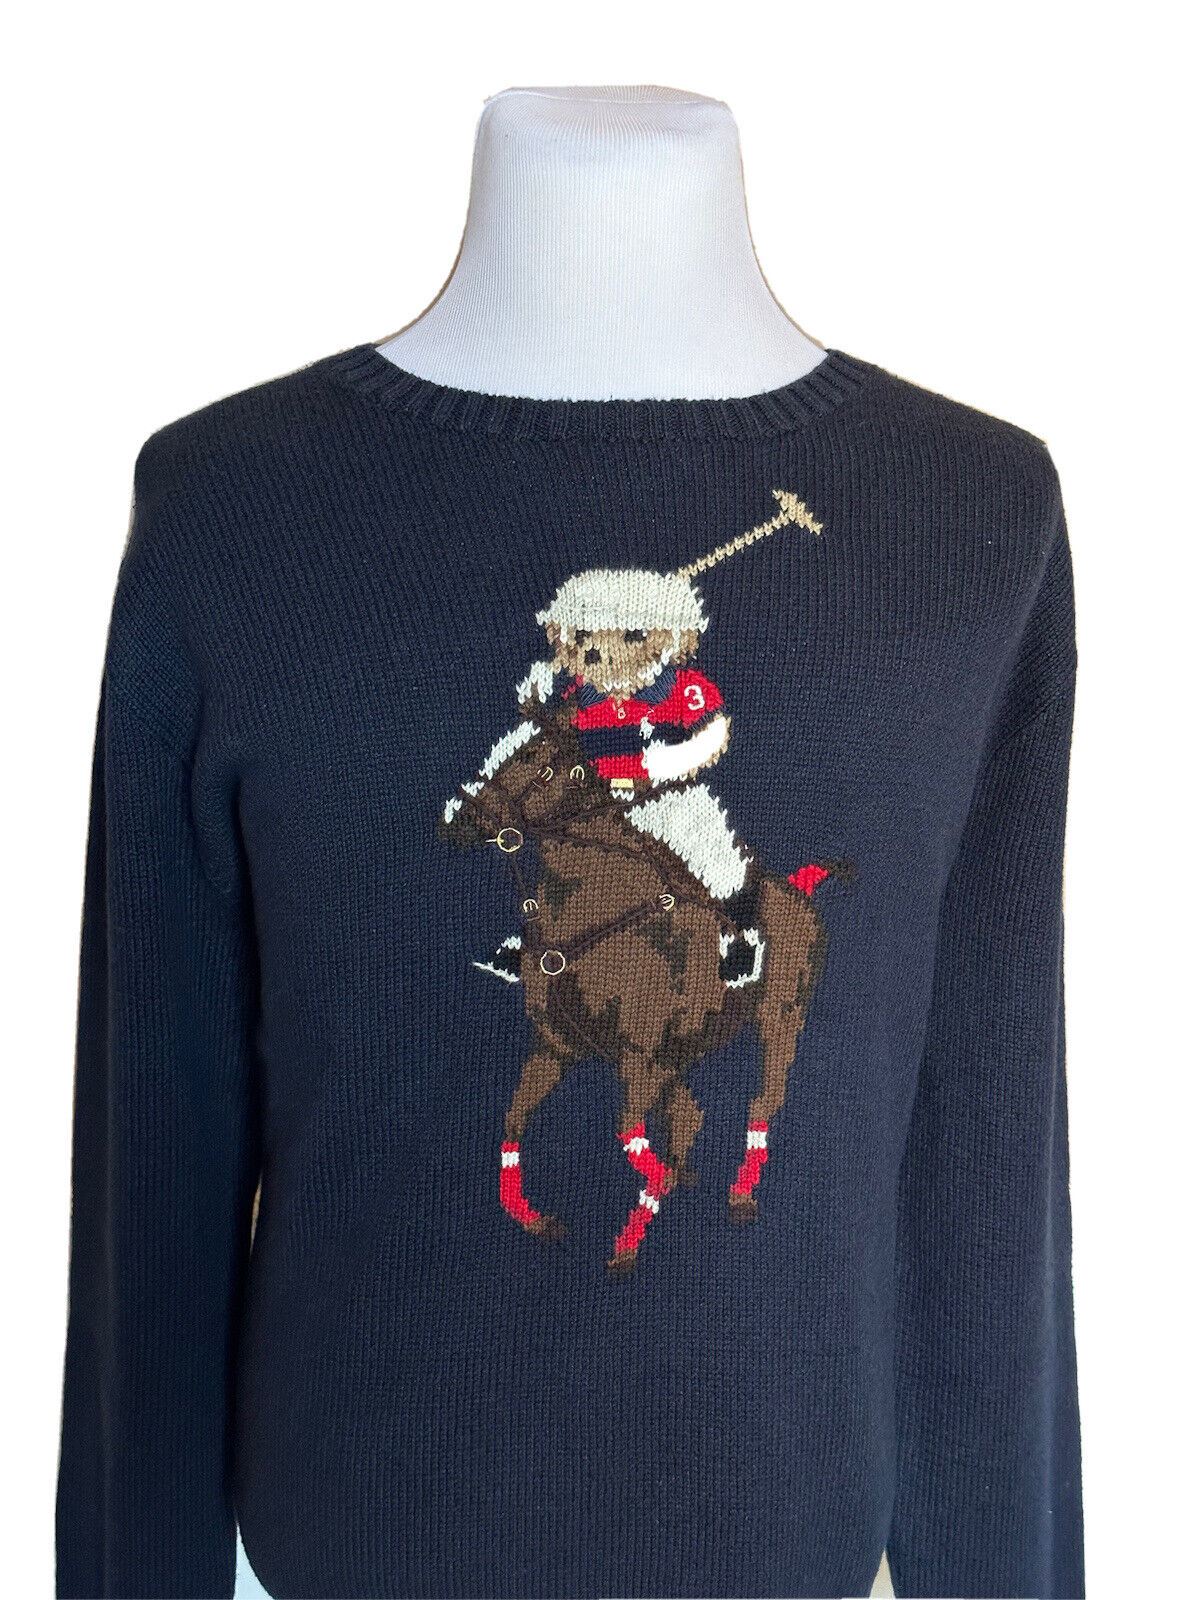 NWT $428 Polo Ralph Lauren Big Pony Bear Cotton/Linen Blue Sweater 3XB